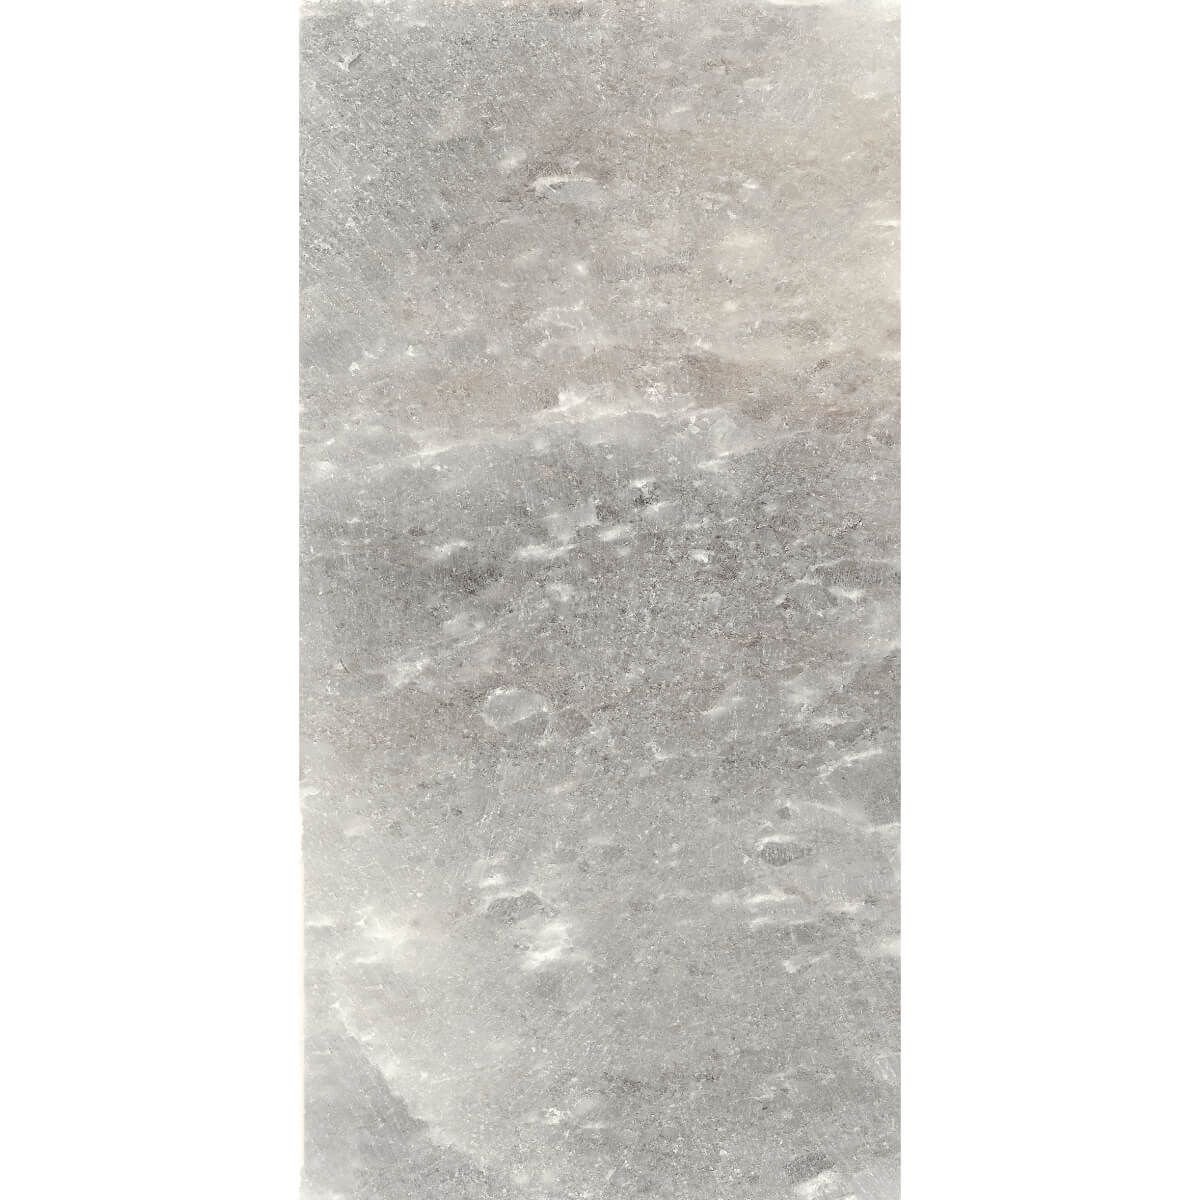 Gres Rock Salt Celtic Grey 120x60x1 cm